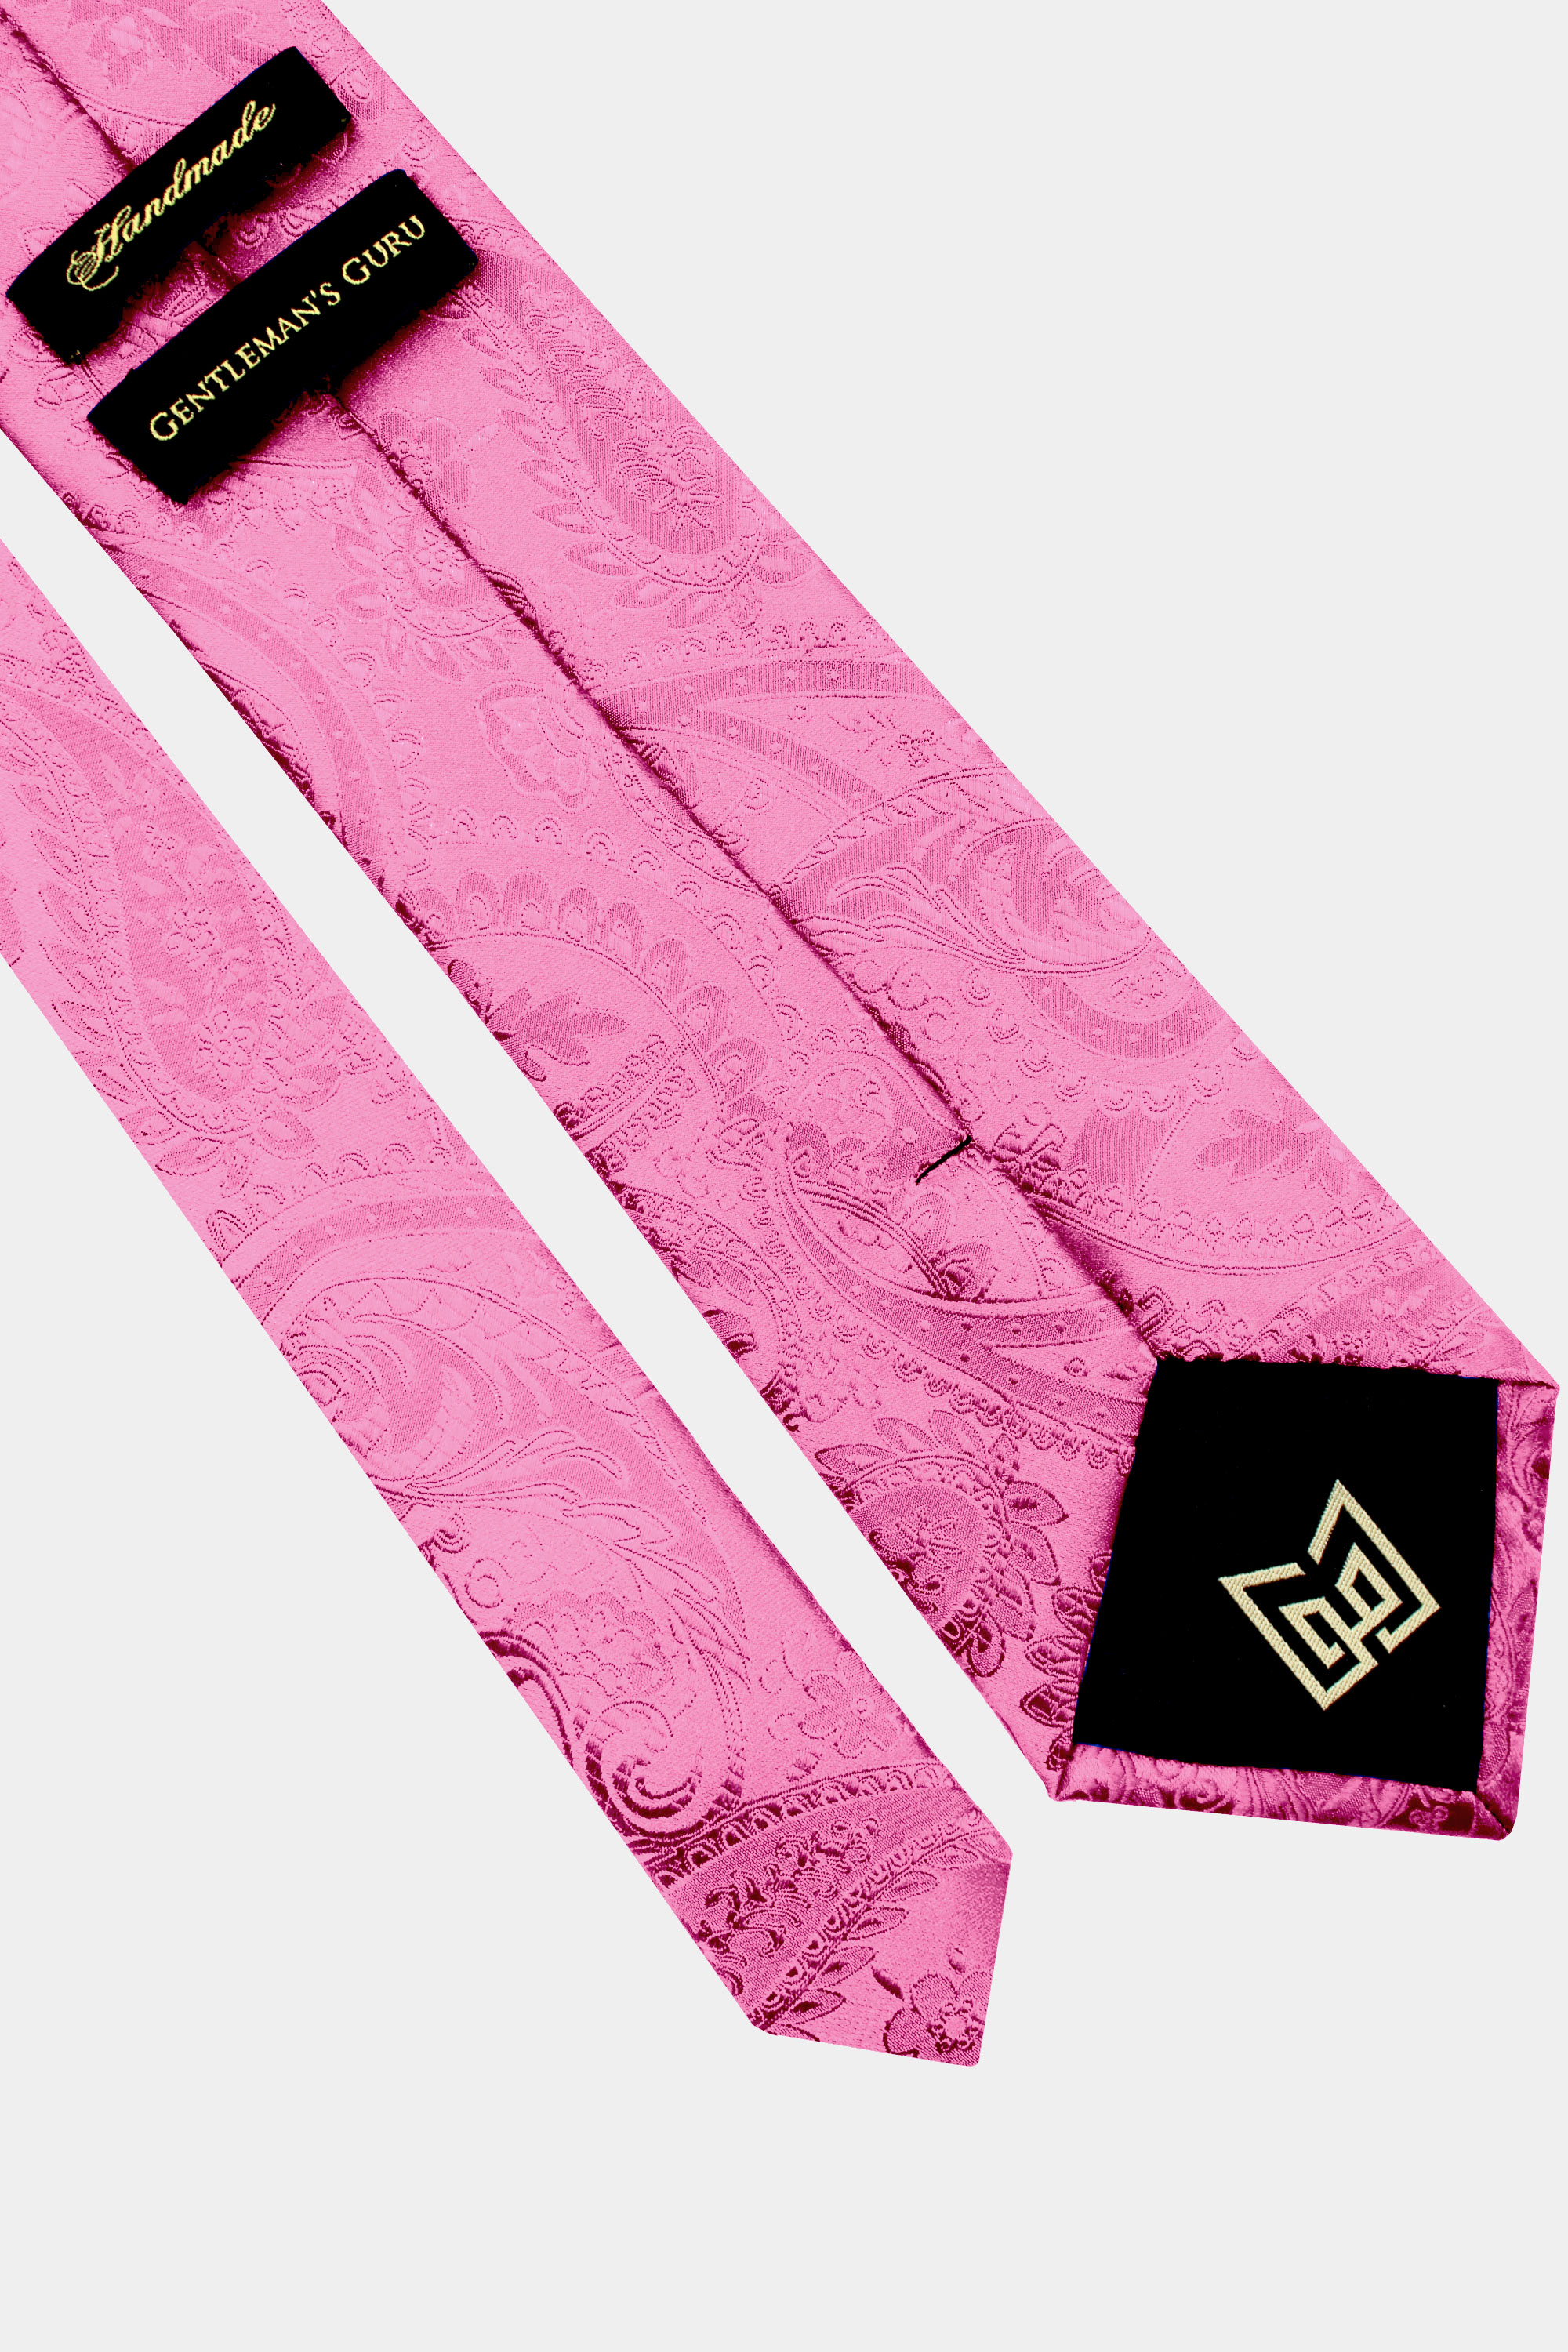 Pale-Pink-Paisley-Tie-from-Gentlemansguru.com